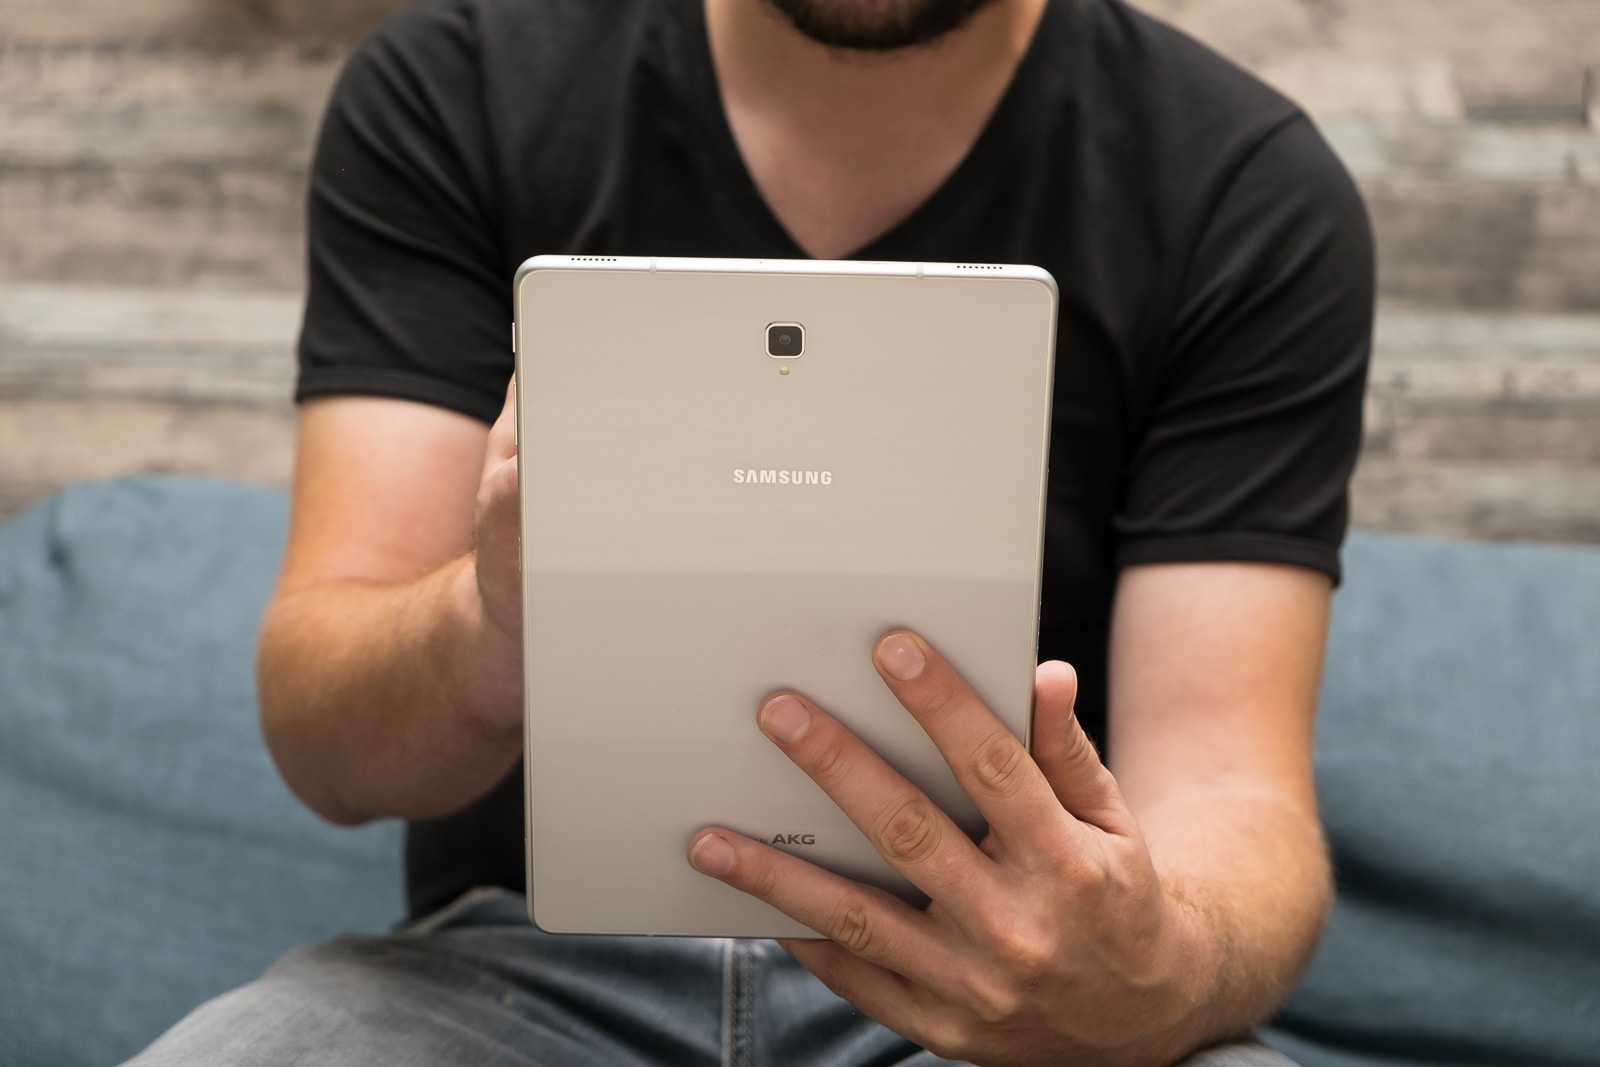 Este é alegadamente o Galaxy Tab S6, o próximo tablet high-end da Samsung